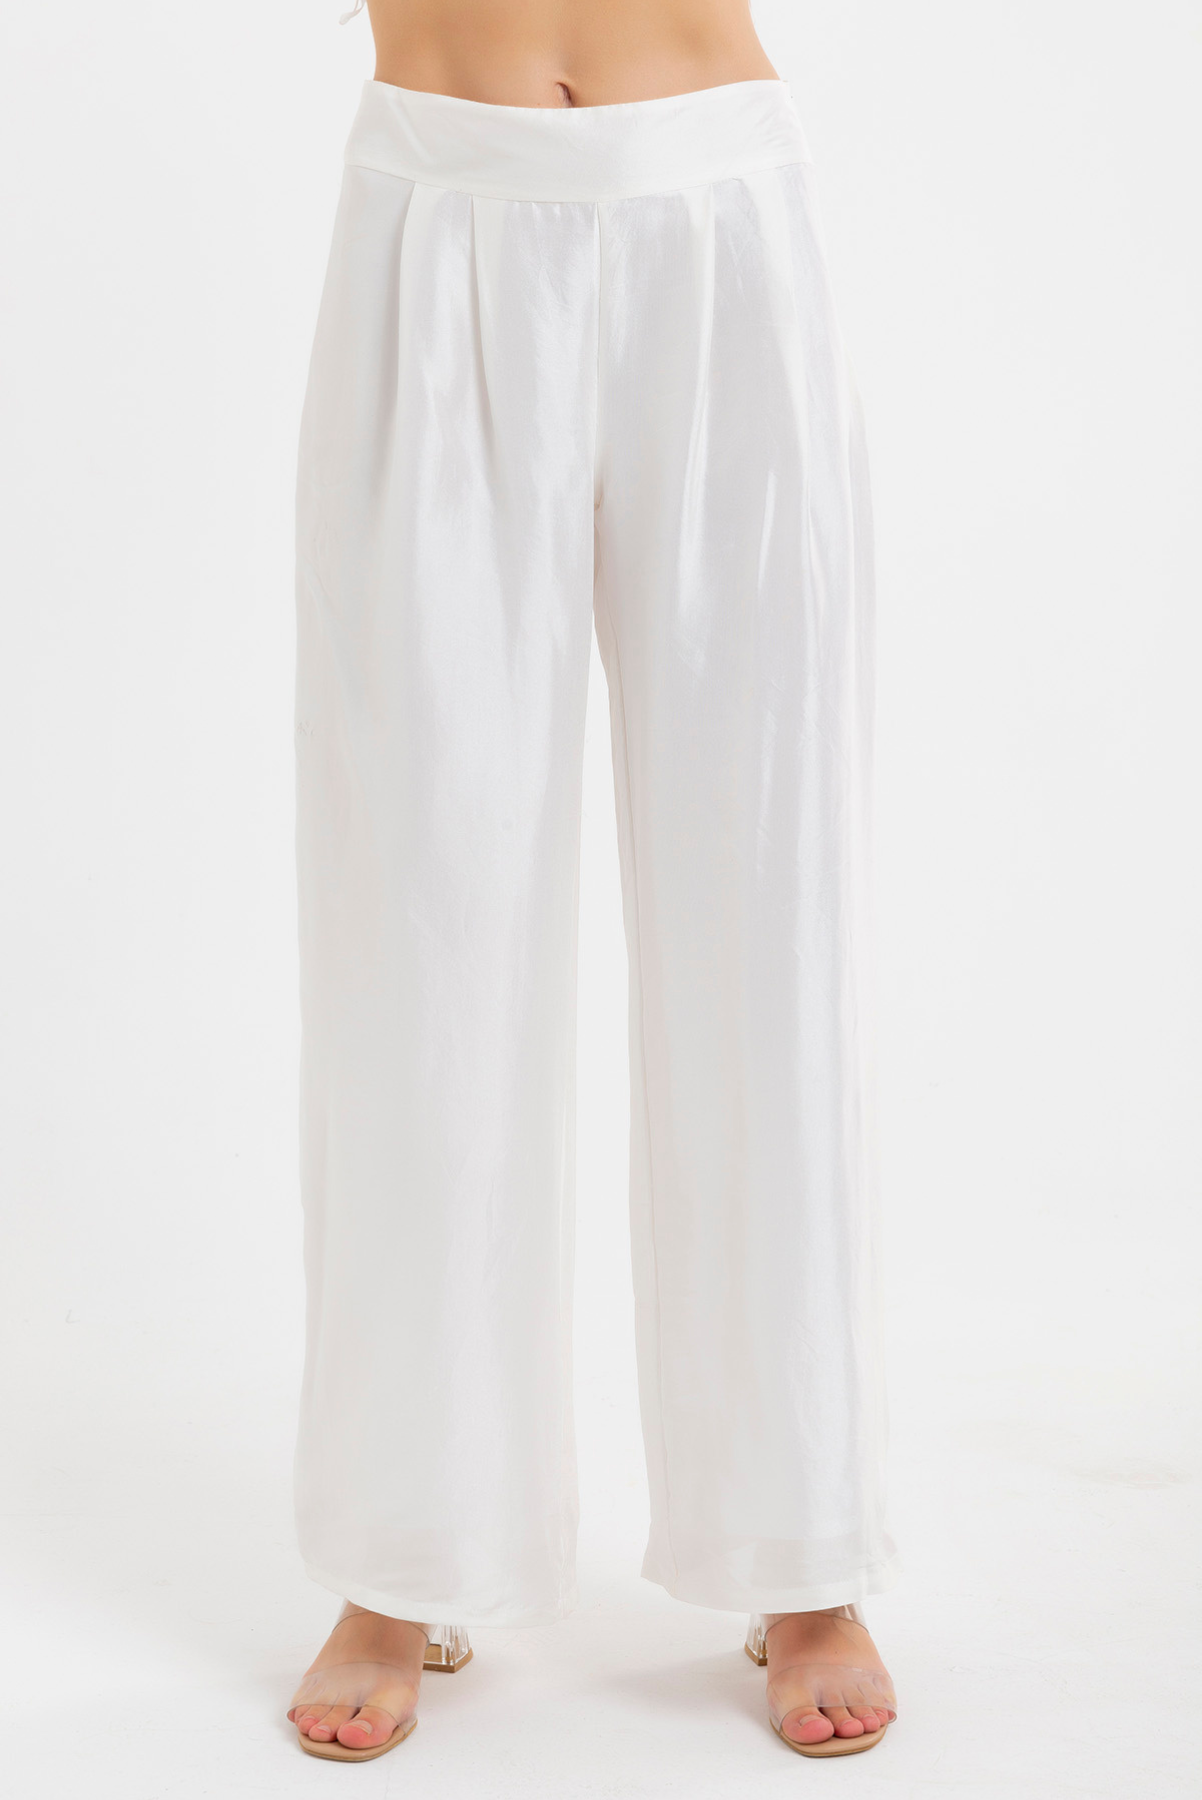 Solid Color Dupion Silk Pant in Cream : MLC1551